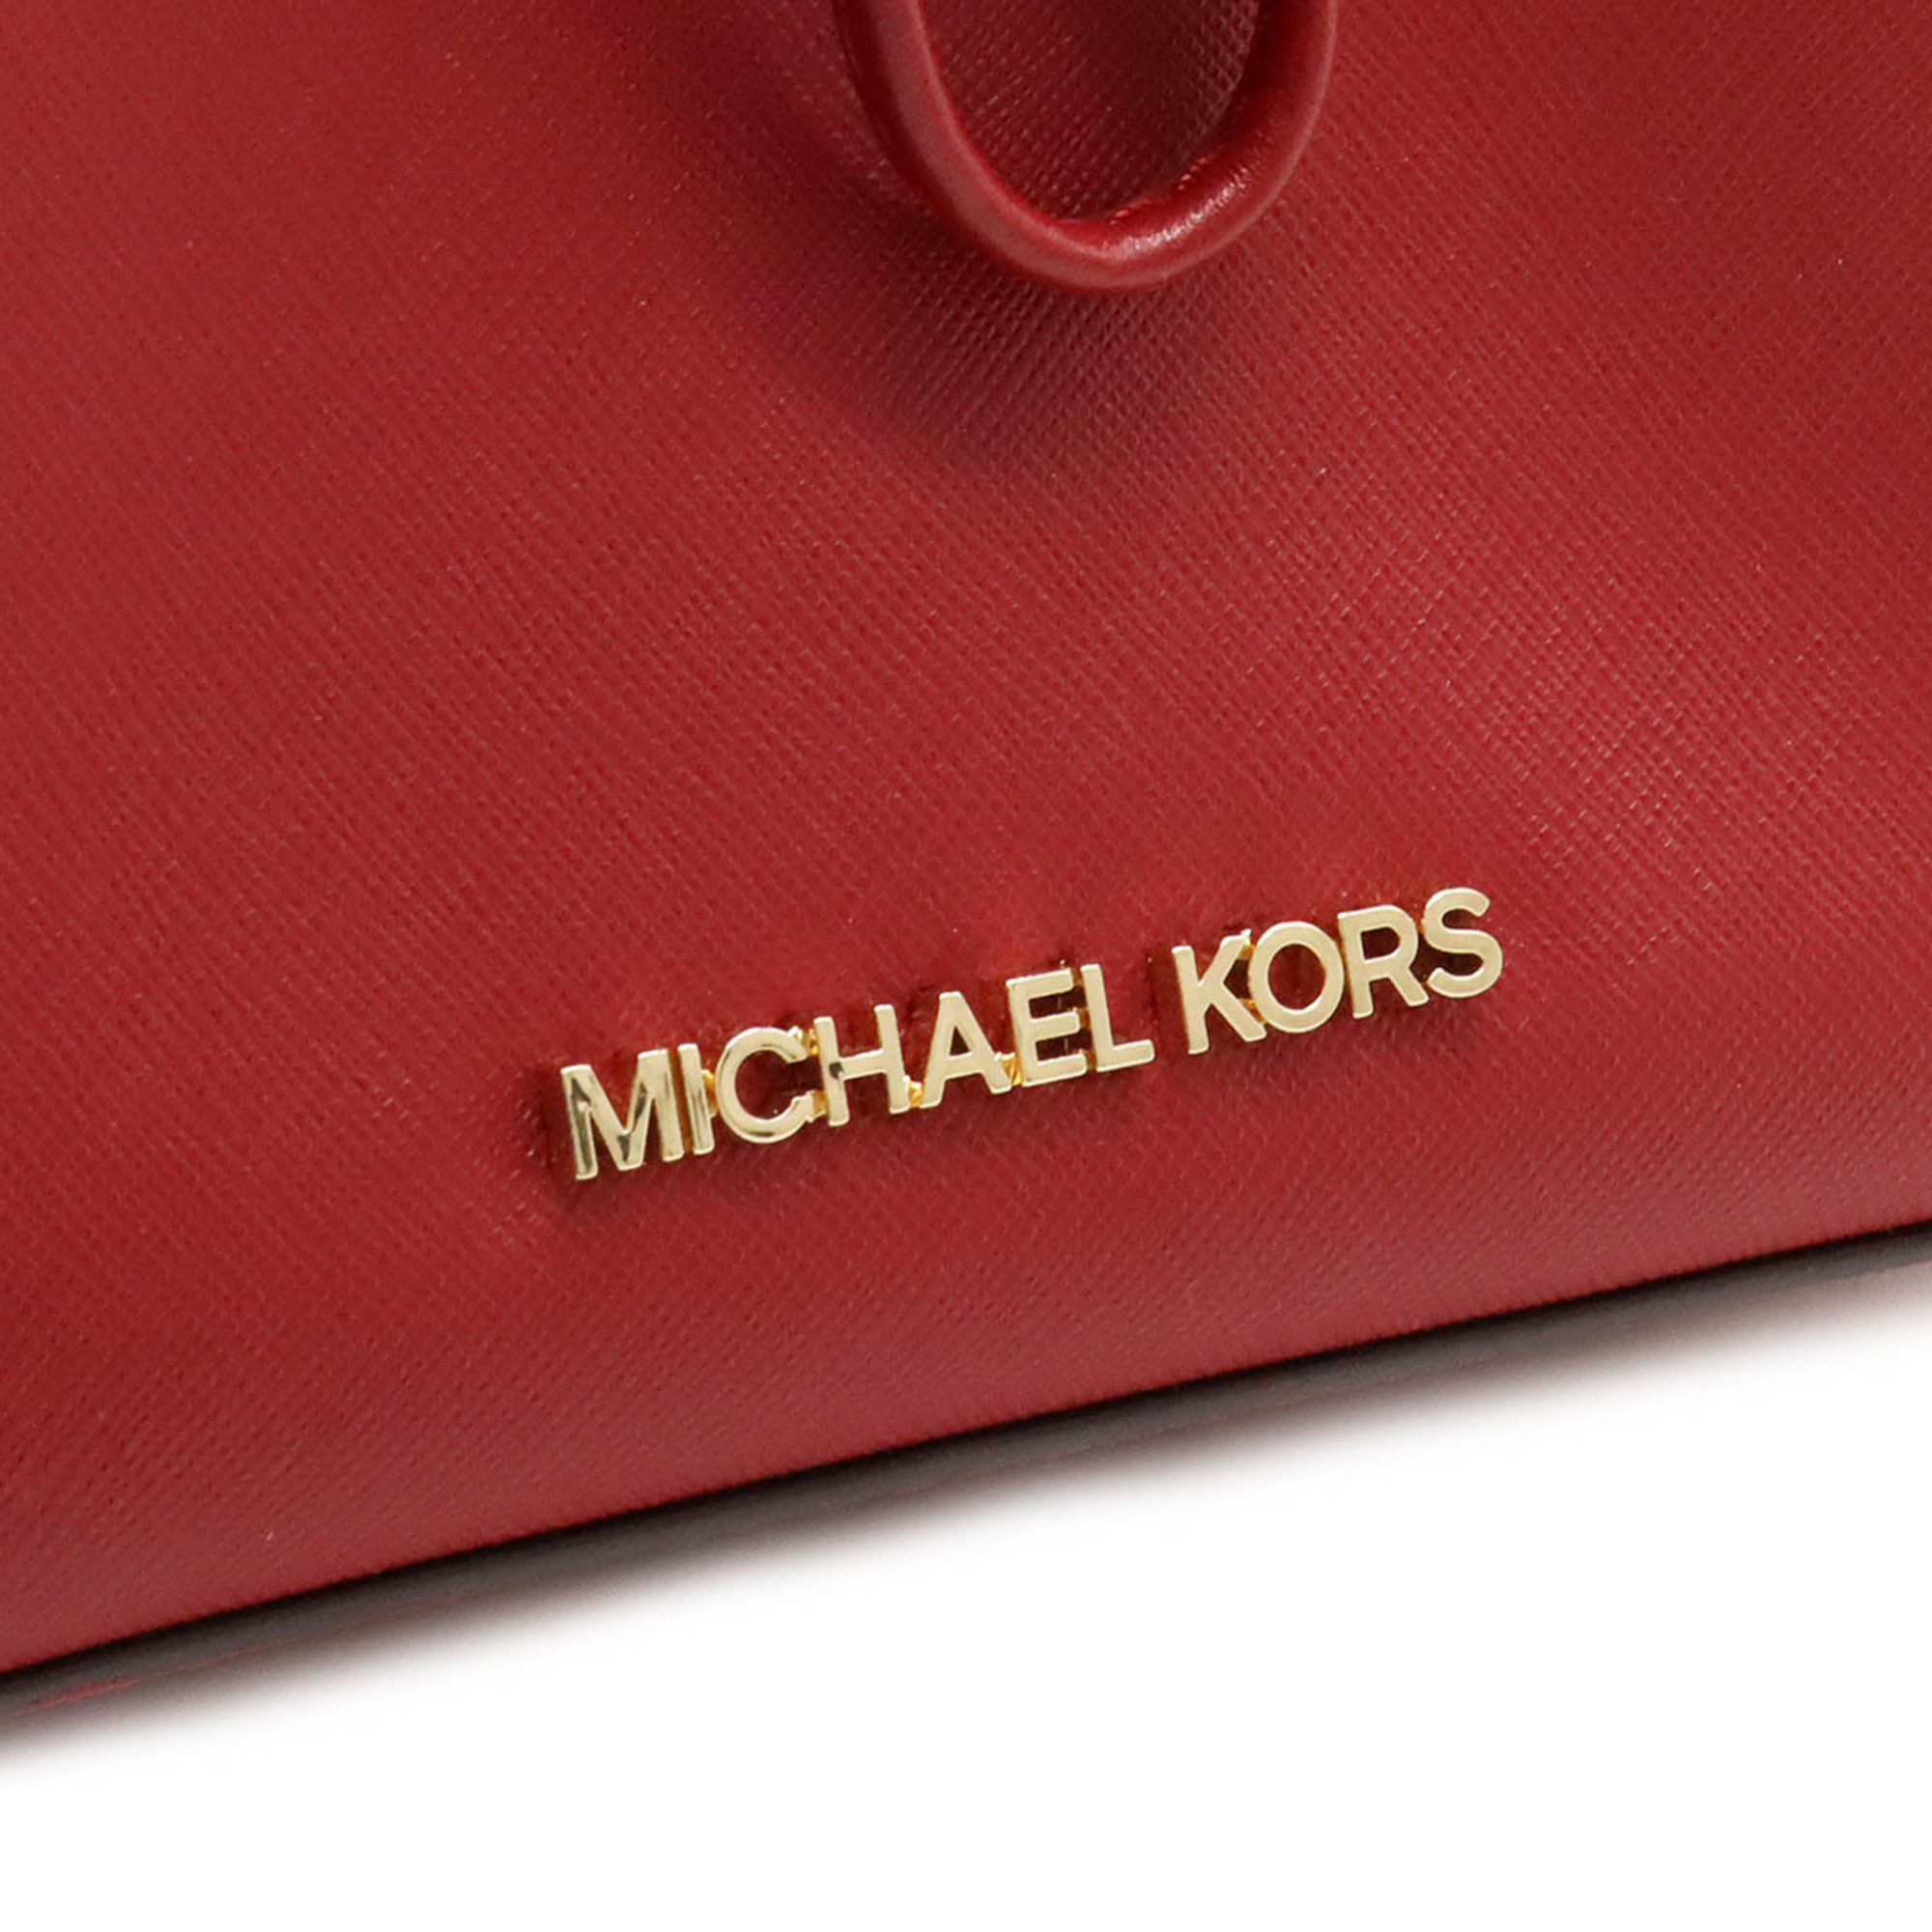 MICHAEL KORS Michael Kors handbag bag shoulder leather red 35T0GU2C0L